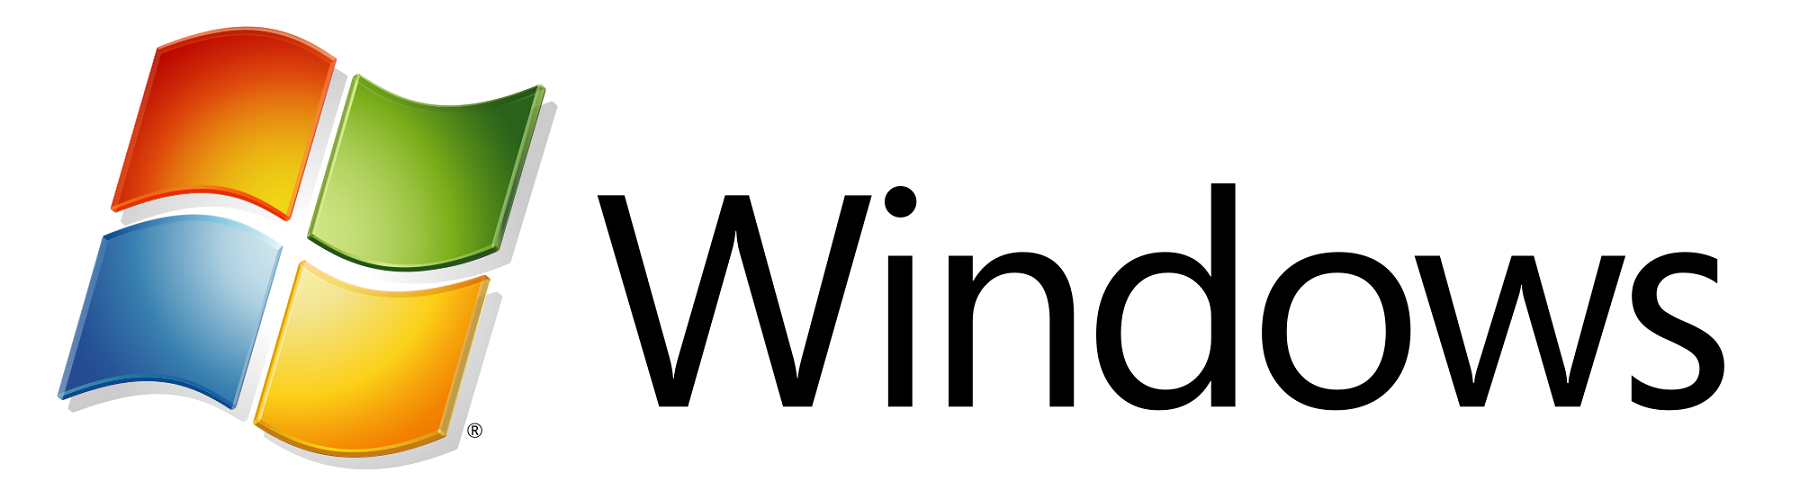 Microsoft Windows PNG - 7598